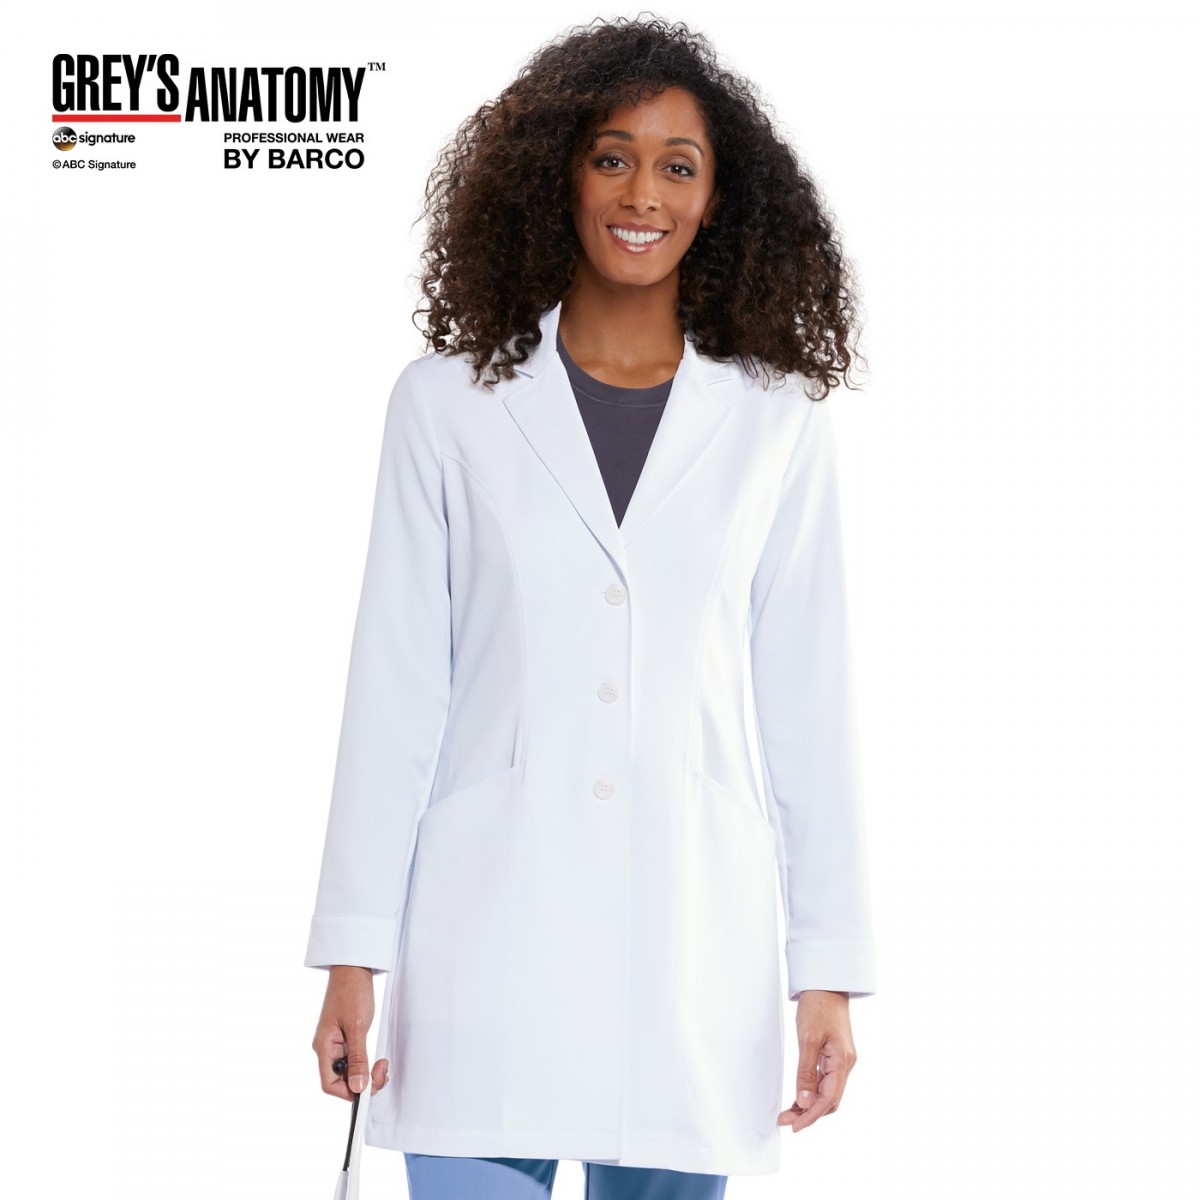 Bata blanca médica para mujer Grey's Anatomy